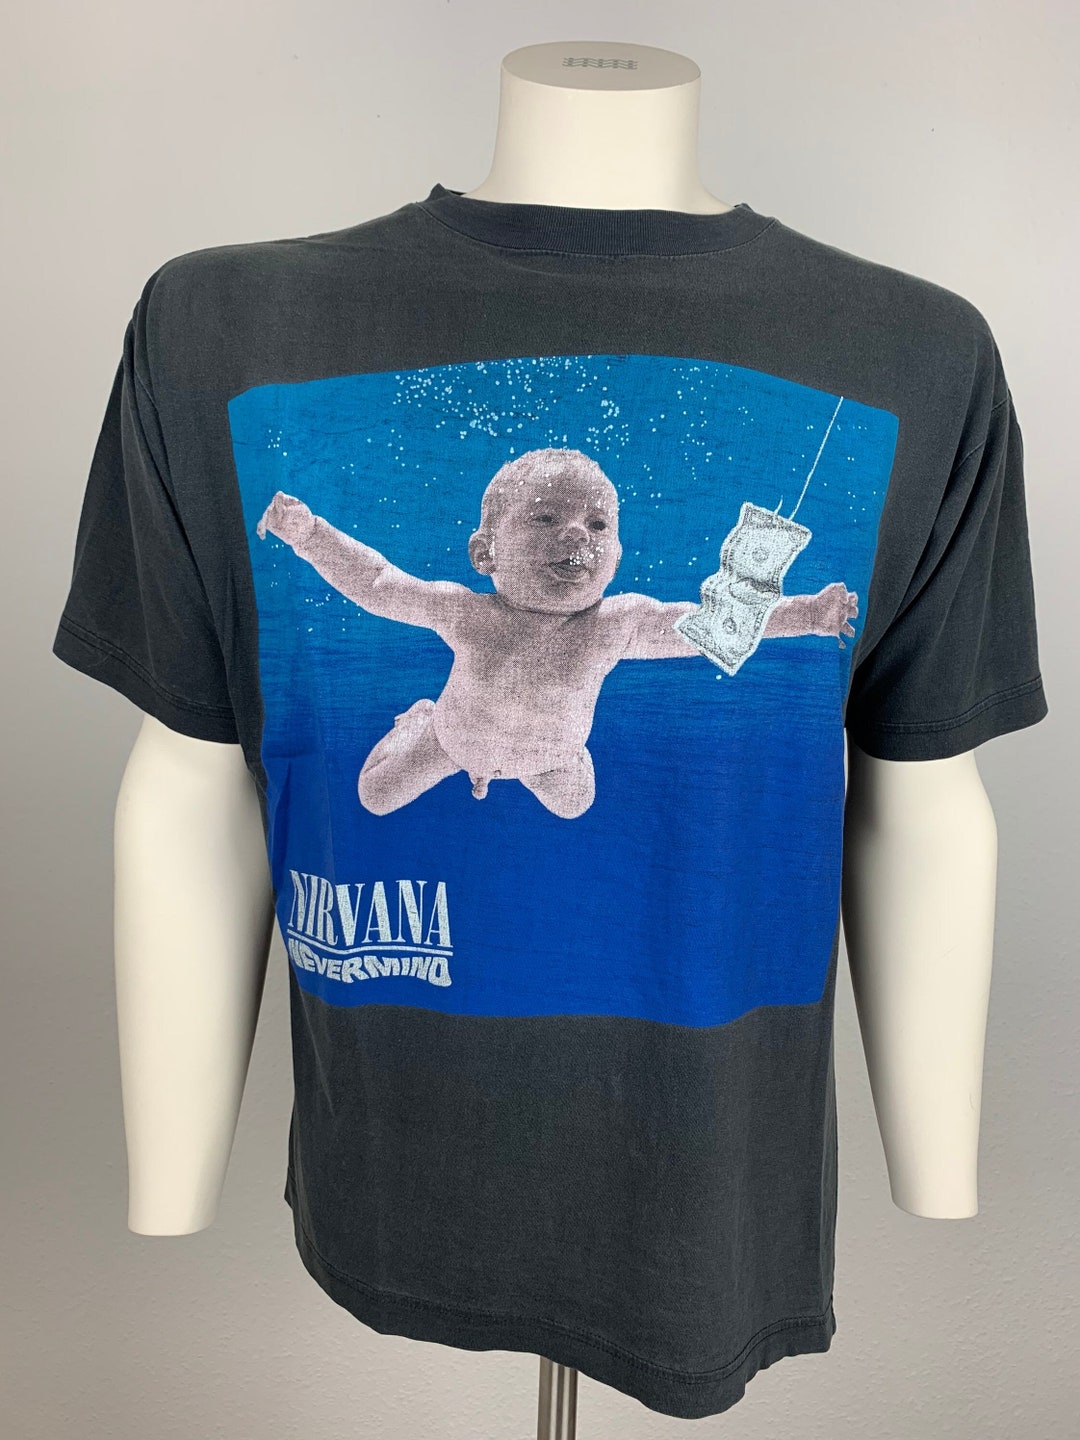 NIRVANA s T shirt Vintage / Kurt Cobain / Nevermind   Etsy